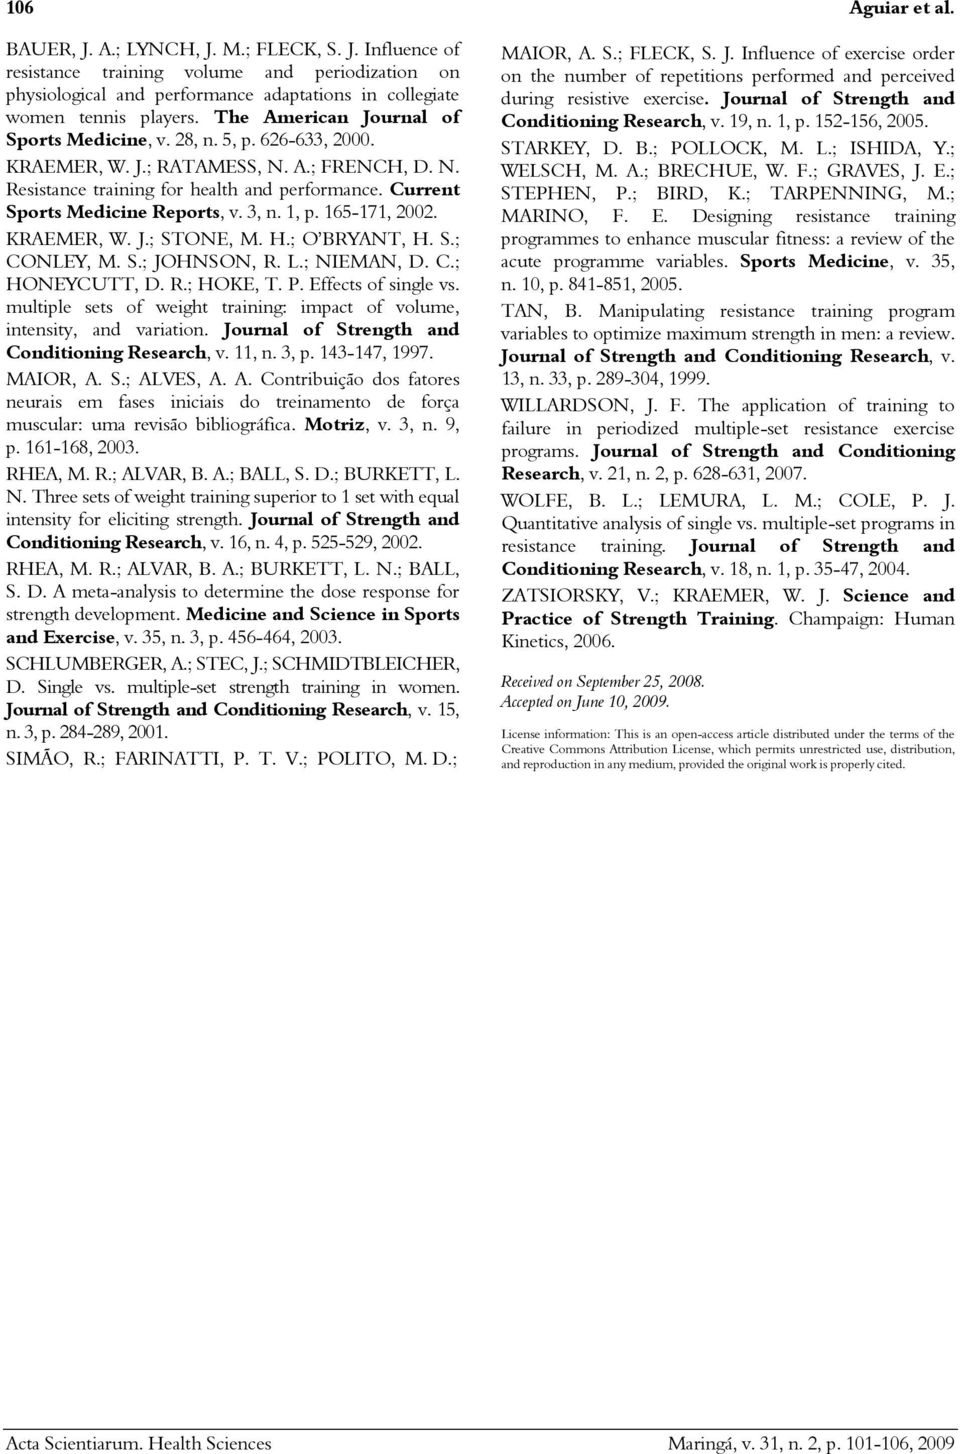 Current Sports Medicine Reports, v. 3, n. 1, p. 165-171, 2002. KRAEMER, W. J.; STONE, M. H.; O BRYANT, H. S.; CONLEY, M. S.; JOHNSON, R. L.; NIEMAN, D. C.; HONEYCUTT, D. R.; HOKE, T. P.